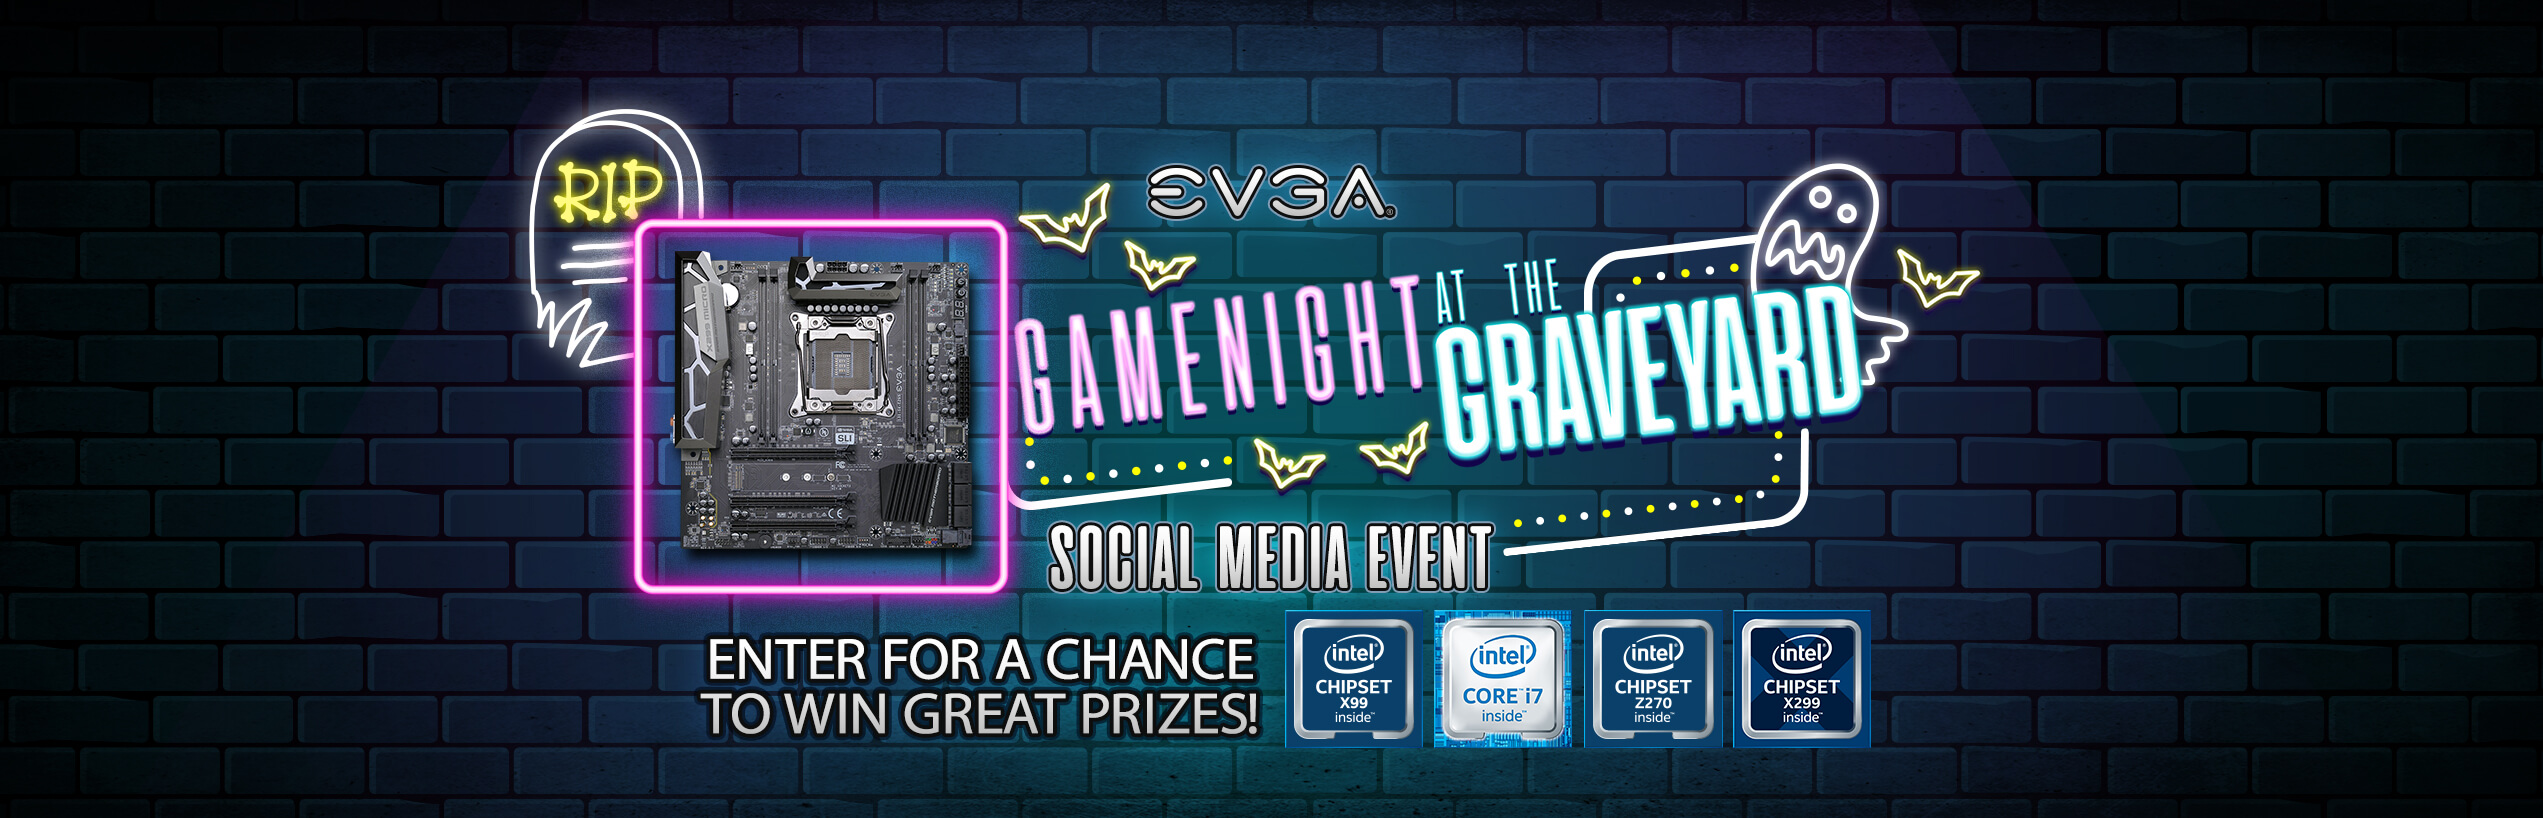 EVGA Game Night at the Graveyard Social Media Event!